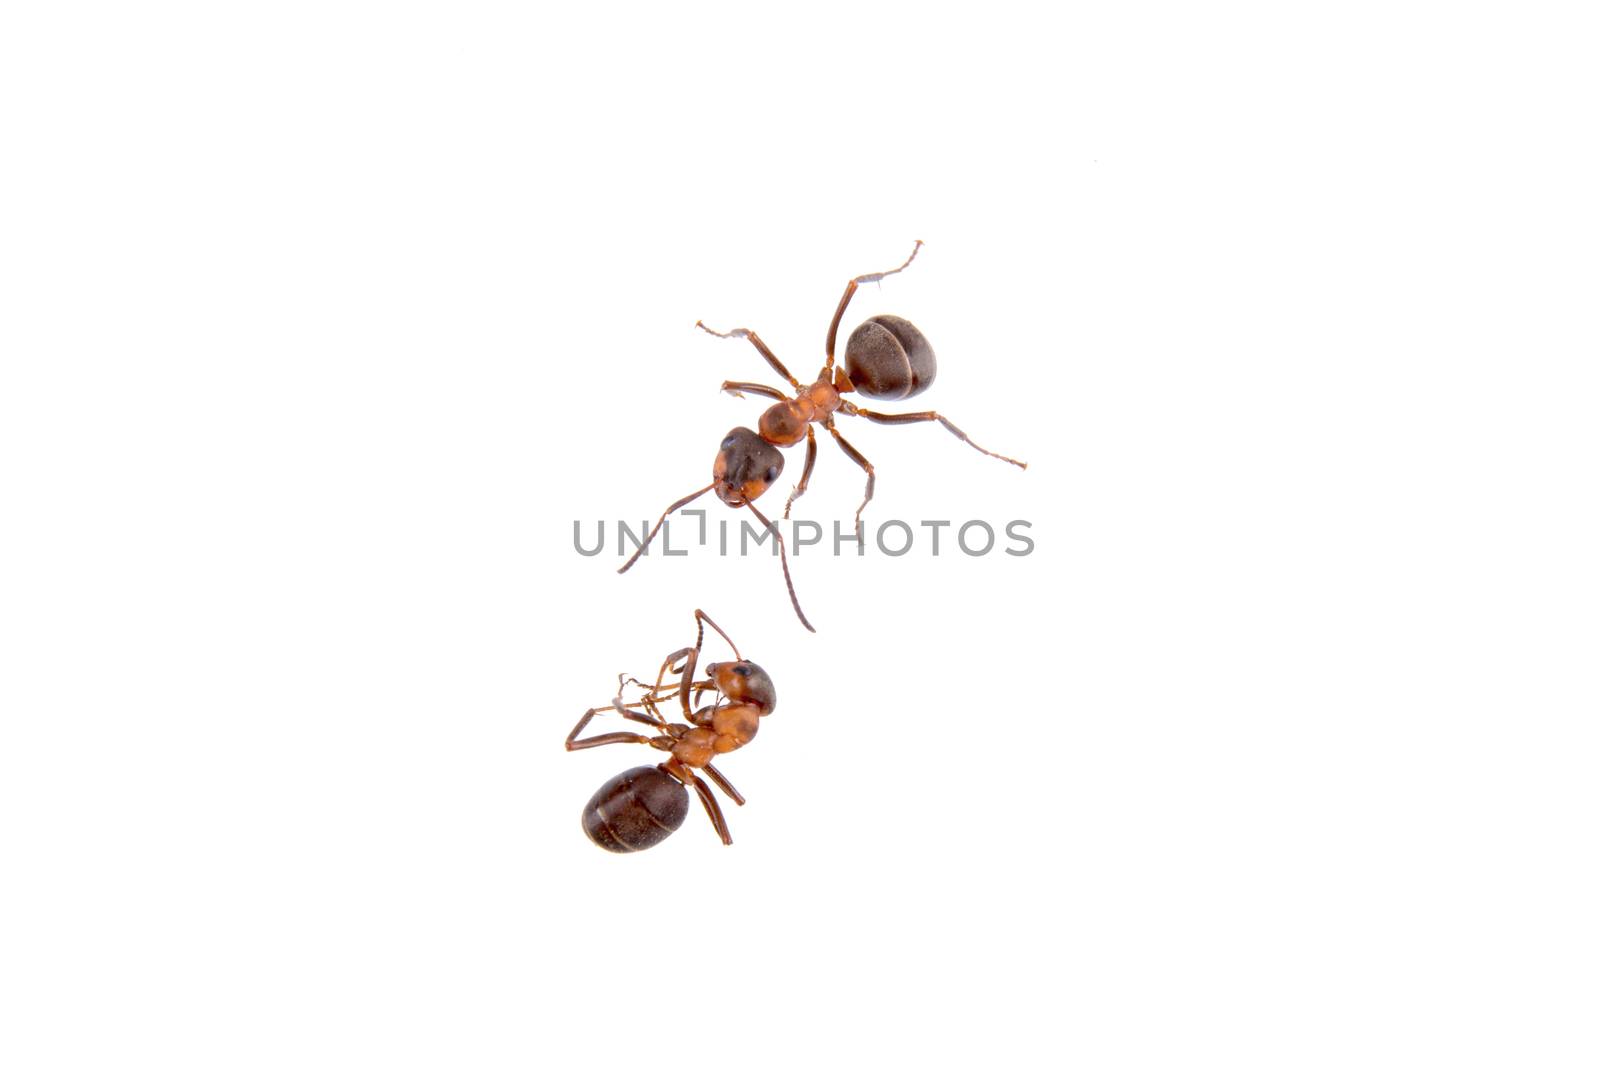 Ants on a white background by neryx